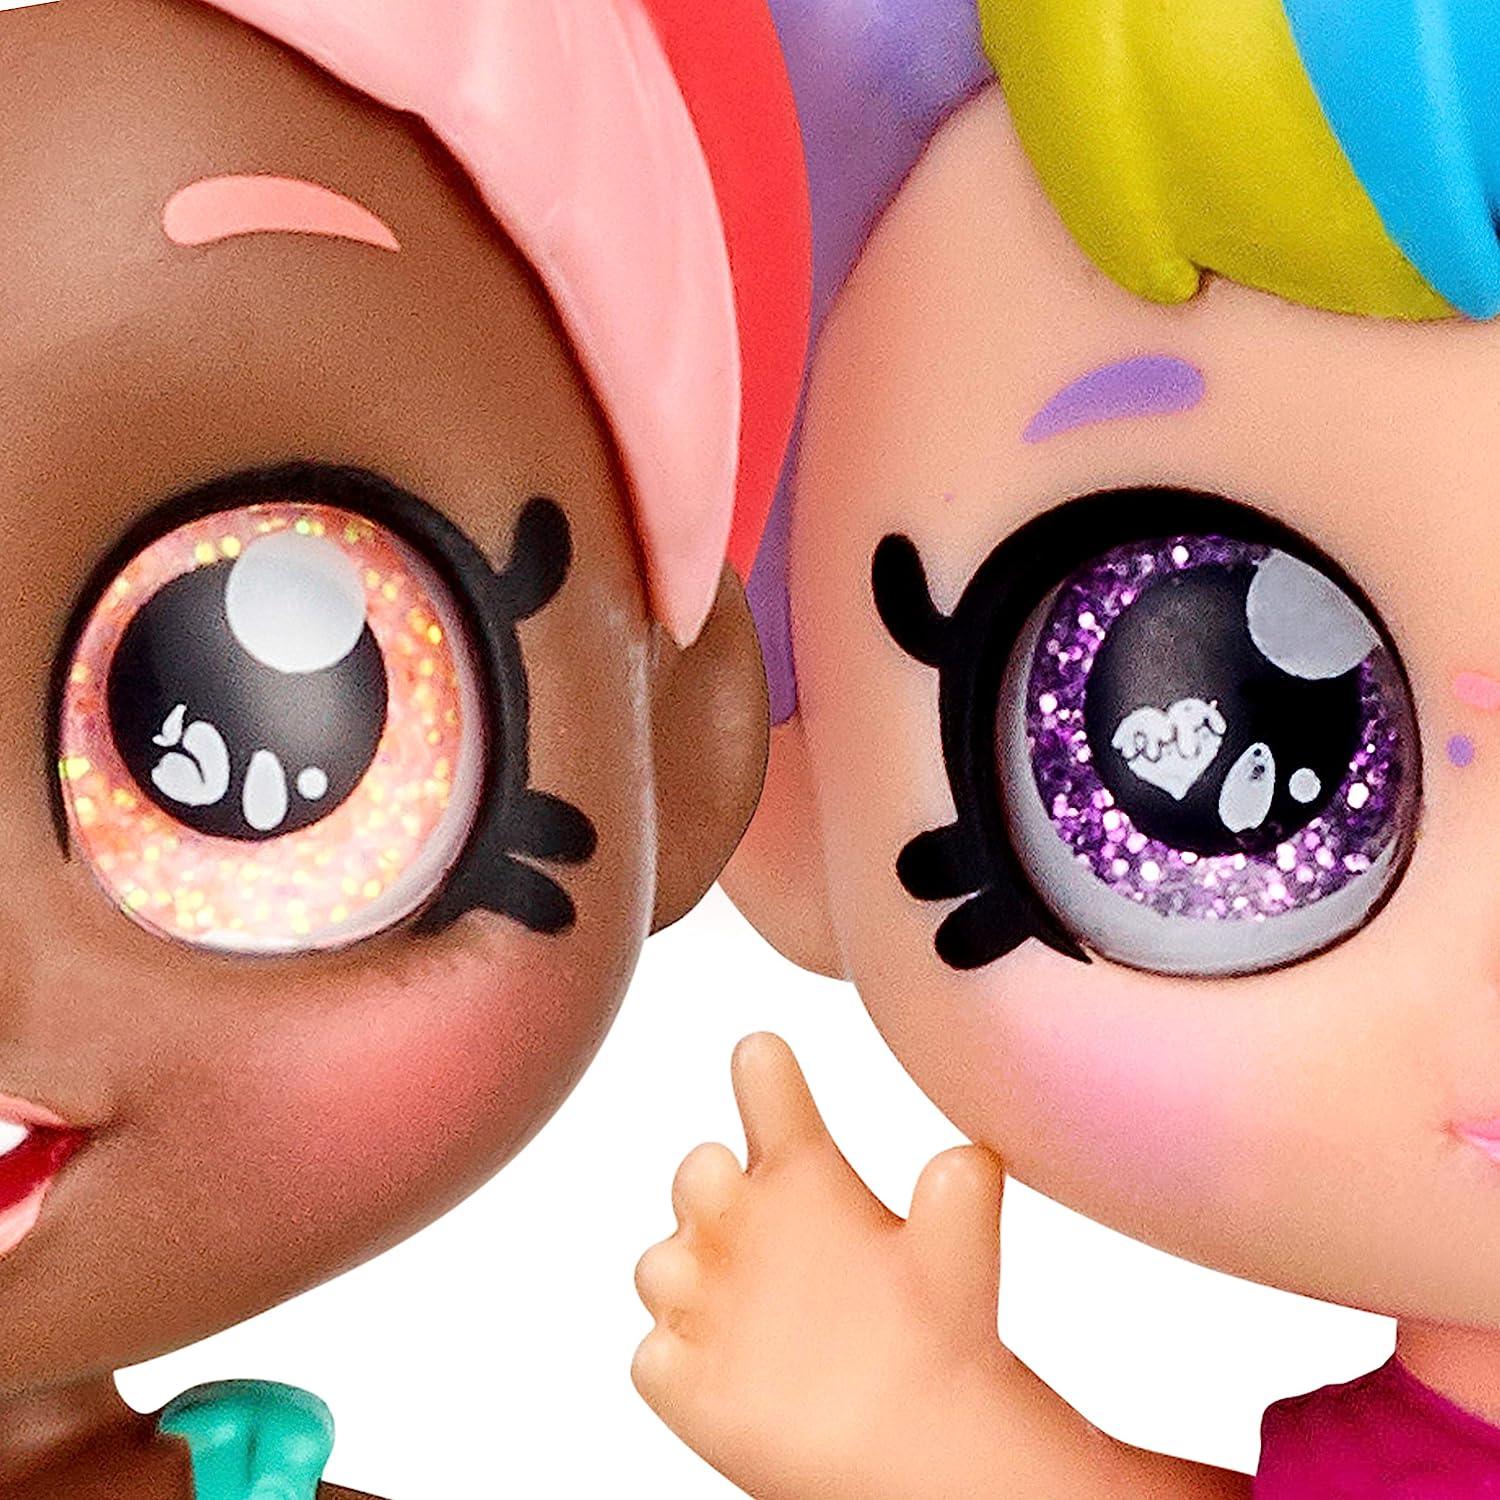 Kindi Kids Minis - Rainbow Besties - 3 Pack Collectible Posable Bobble Head Figure - BumbleToys - 5-7 Years, Fashion Dolls & Accessories, Girls, Kindi Kids